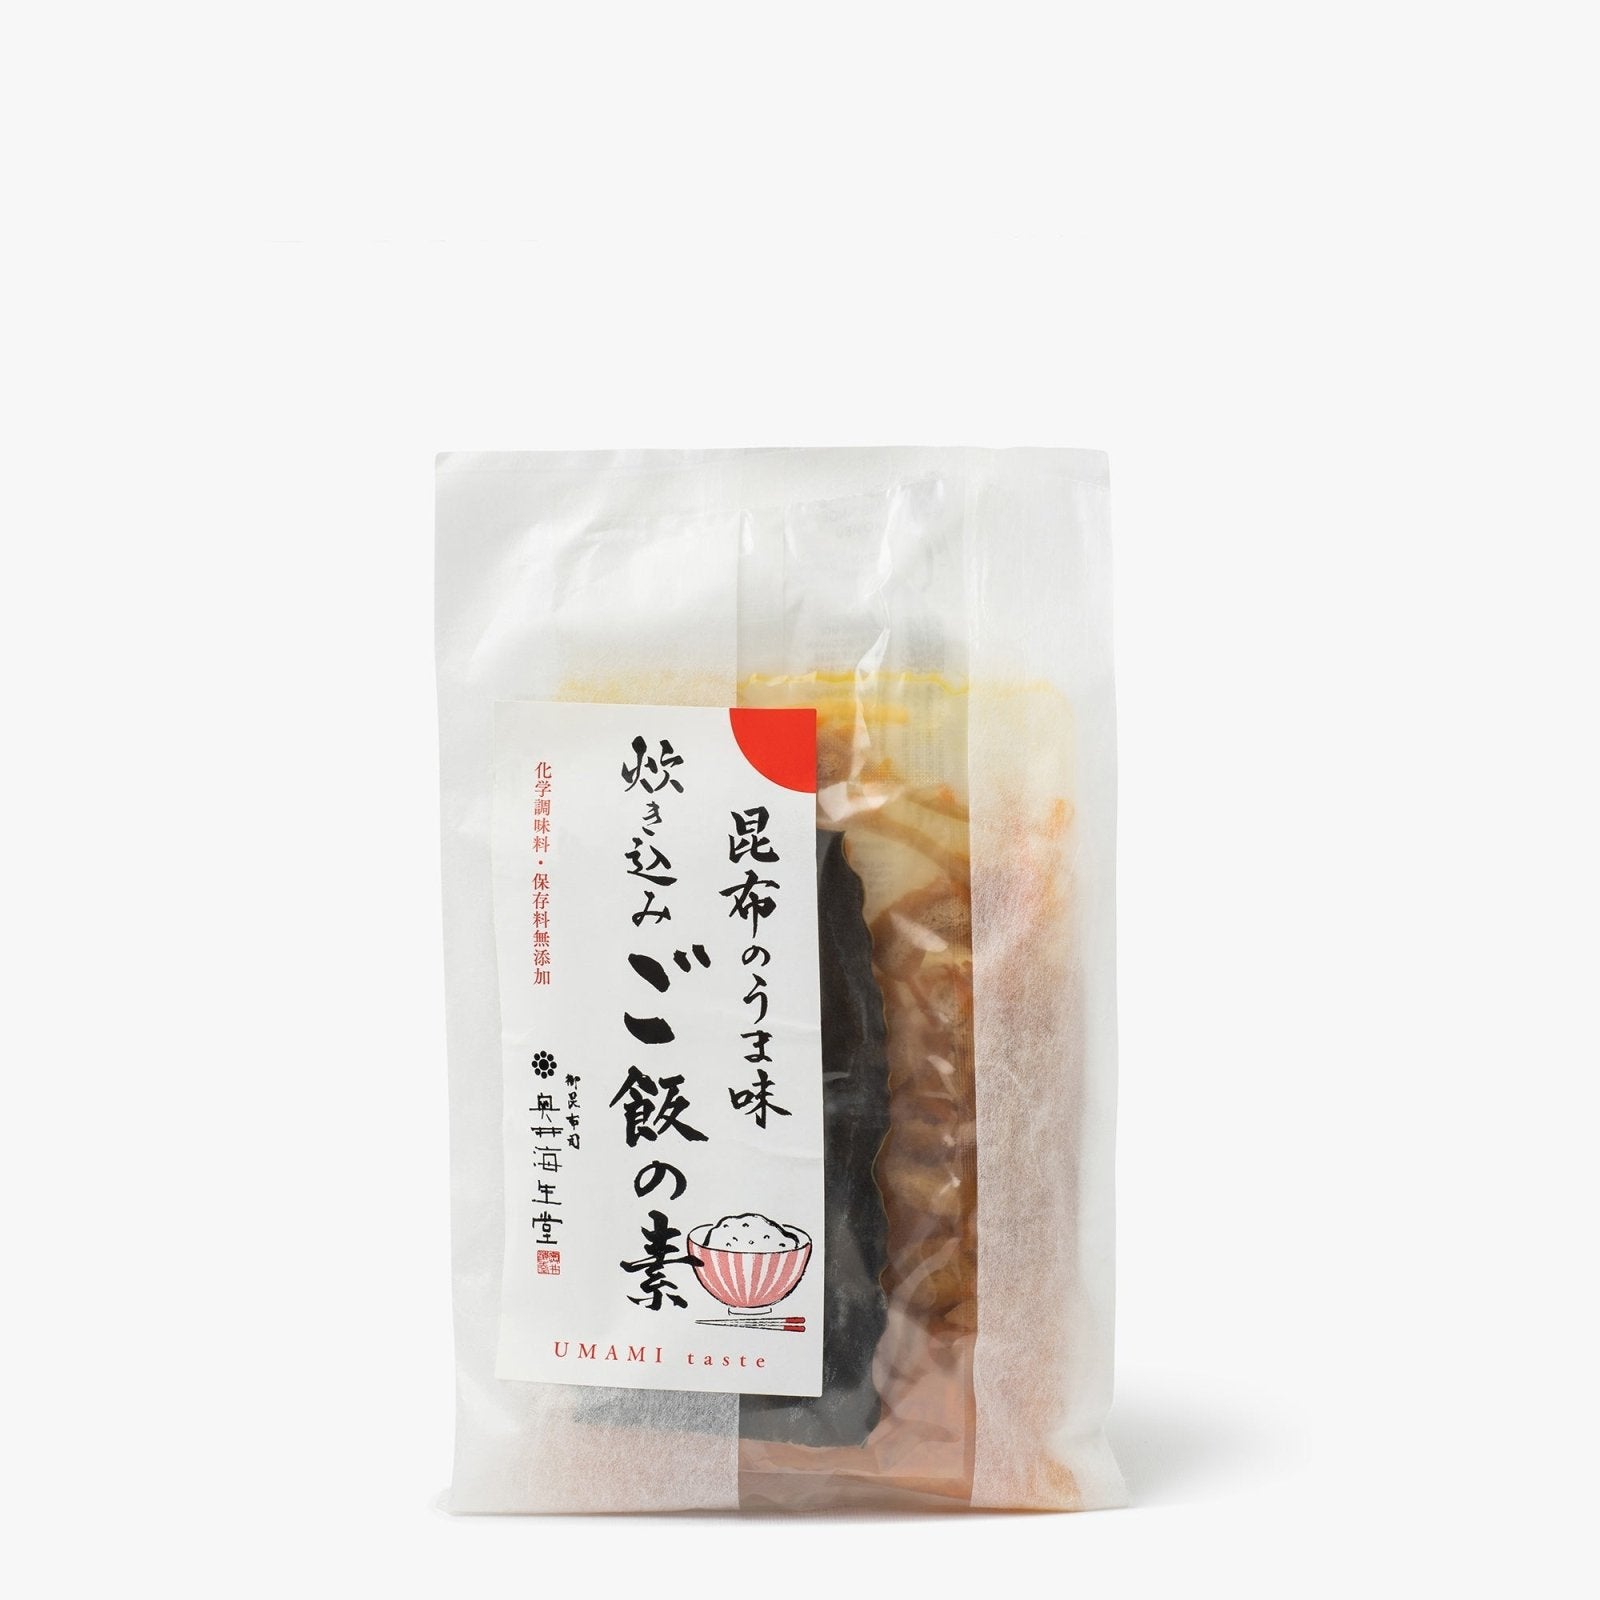 Mélange pour riz au kombu - 230g - Okui Kaiseido - iRASSHAi